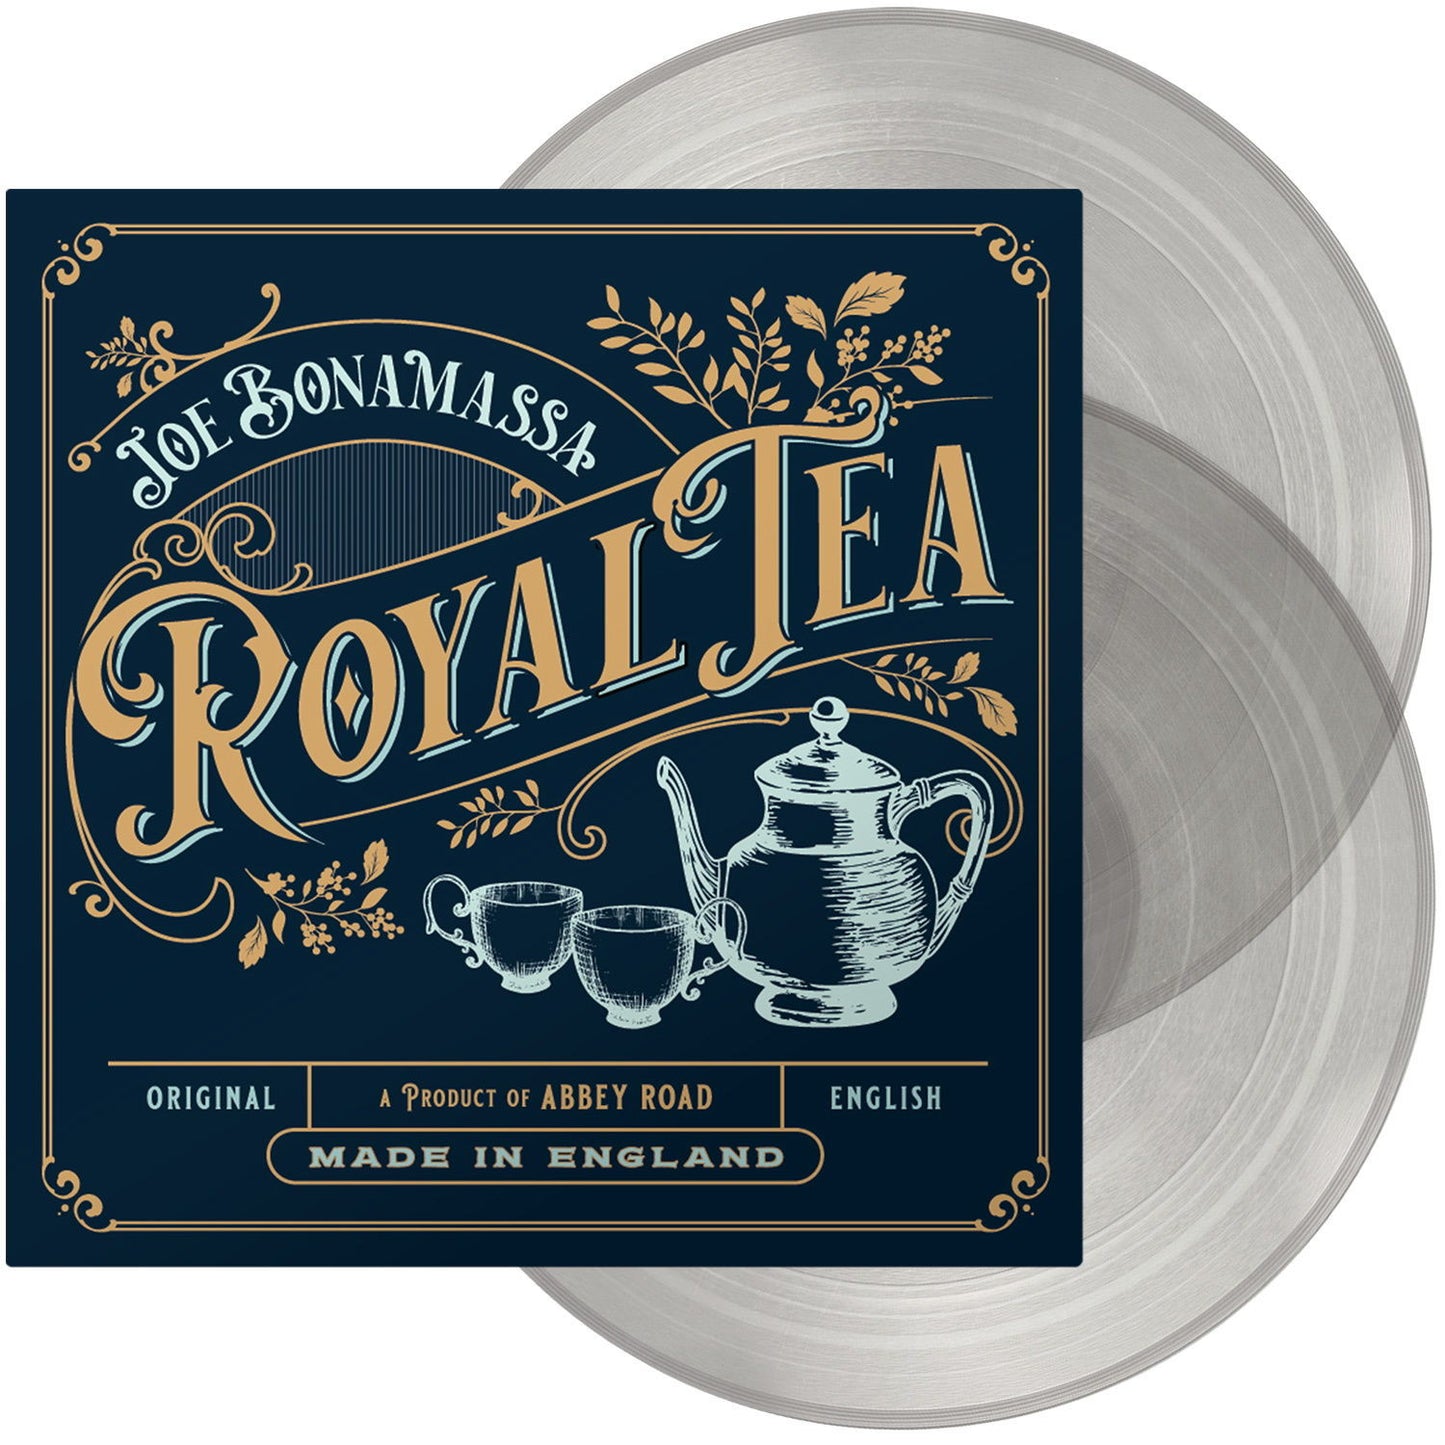 Bonamassa, Joe - Royal tea